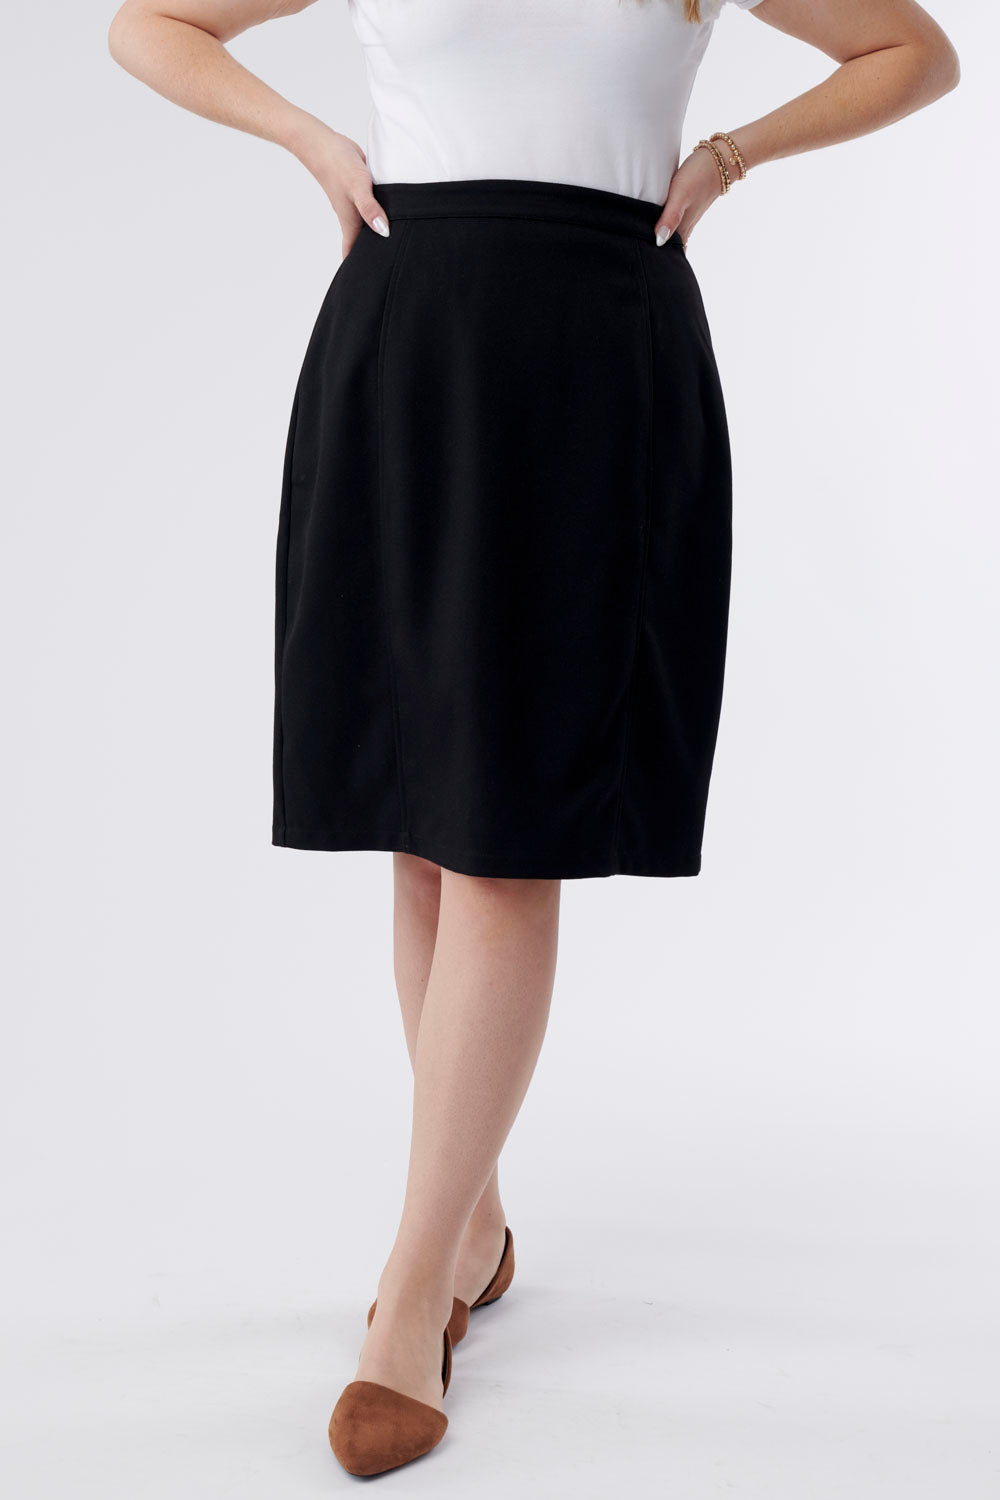 Emma Black Pencil Knee Length Skirt